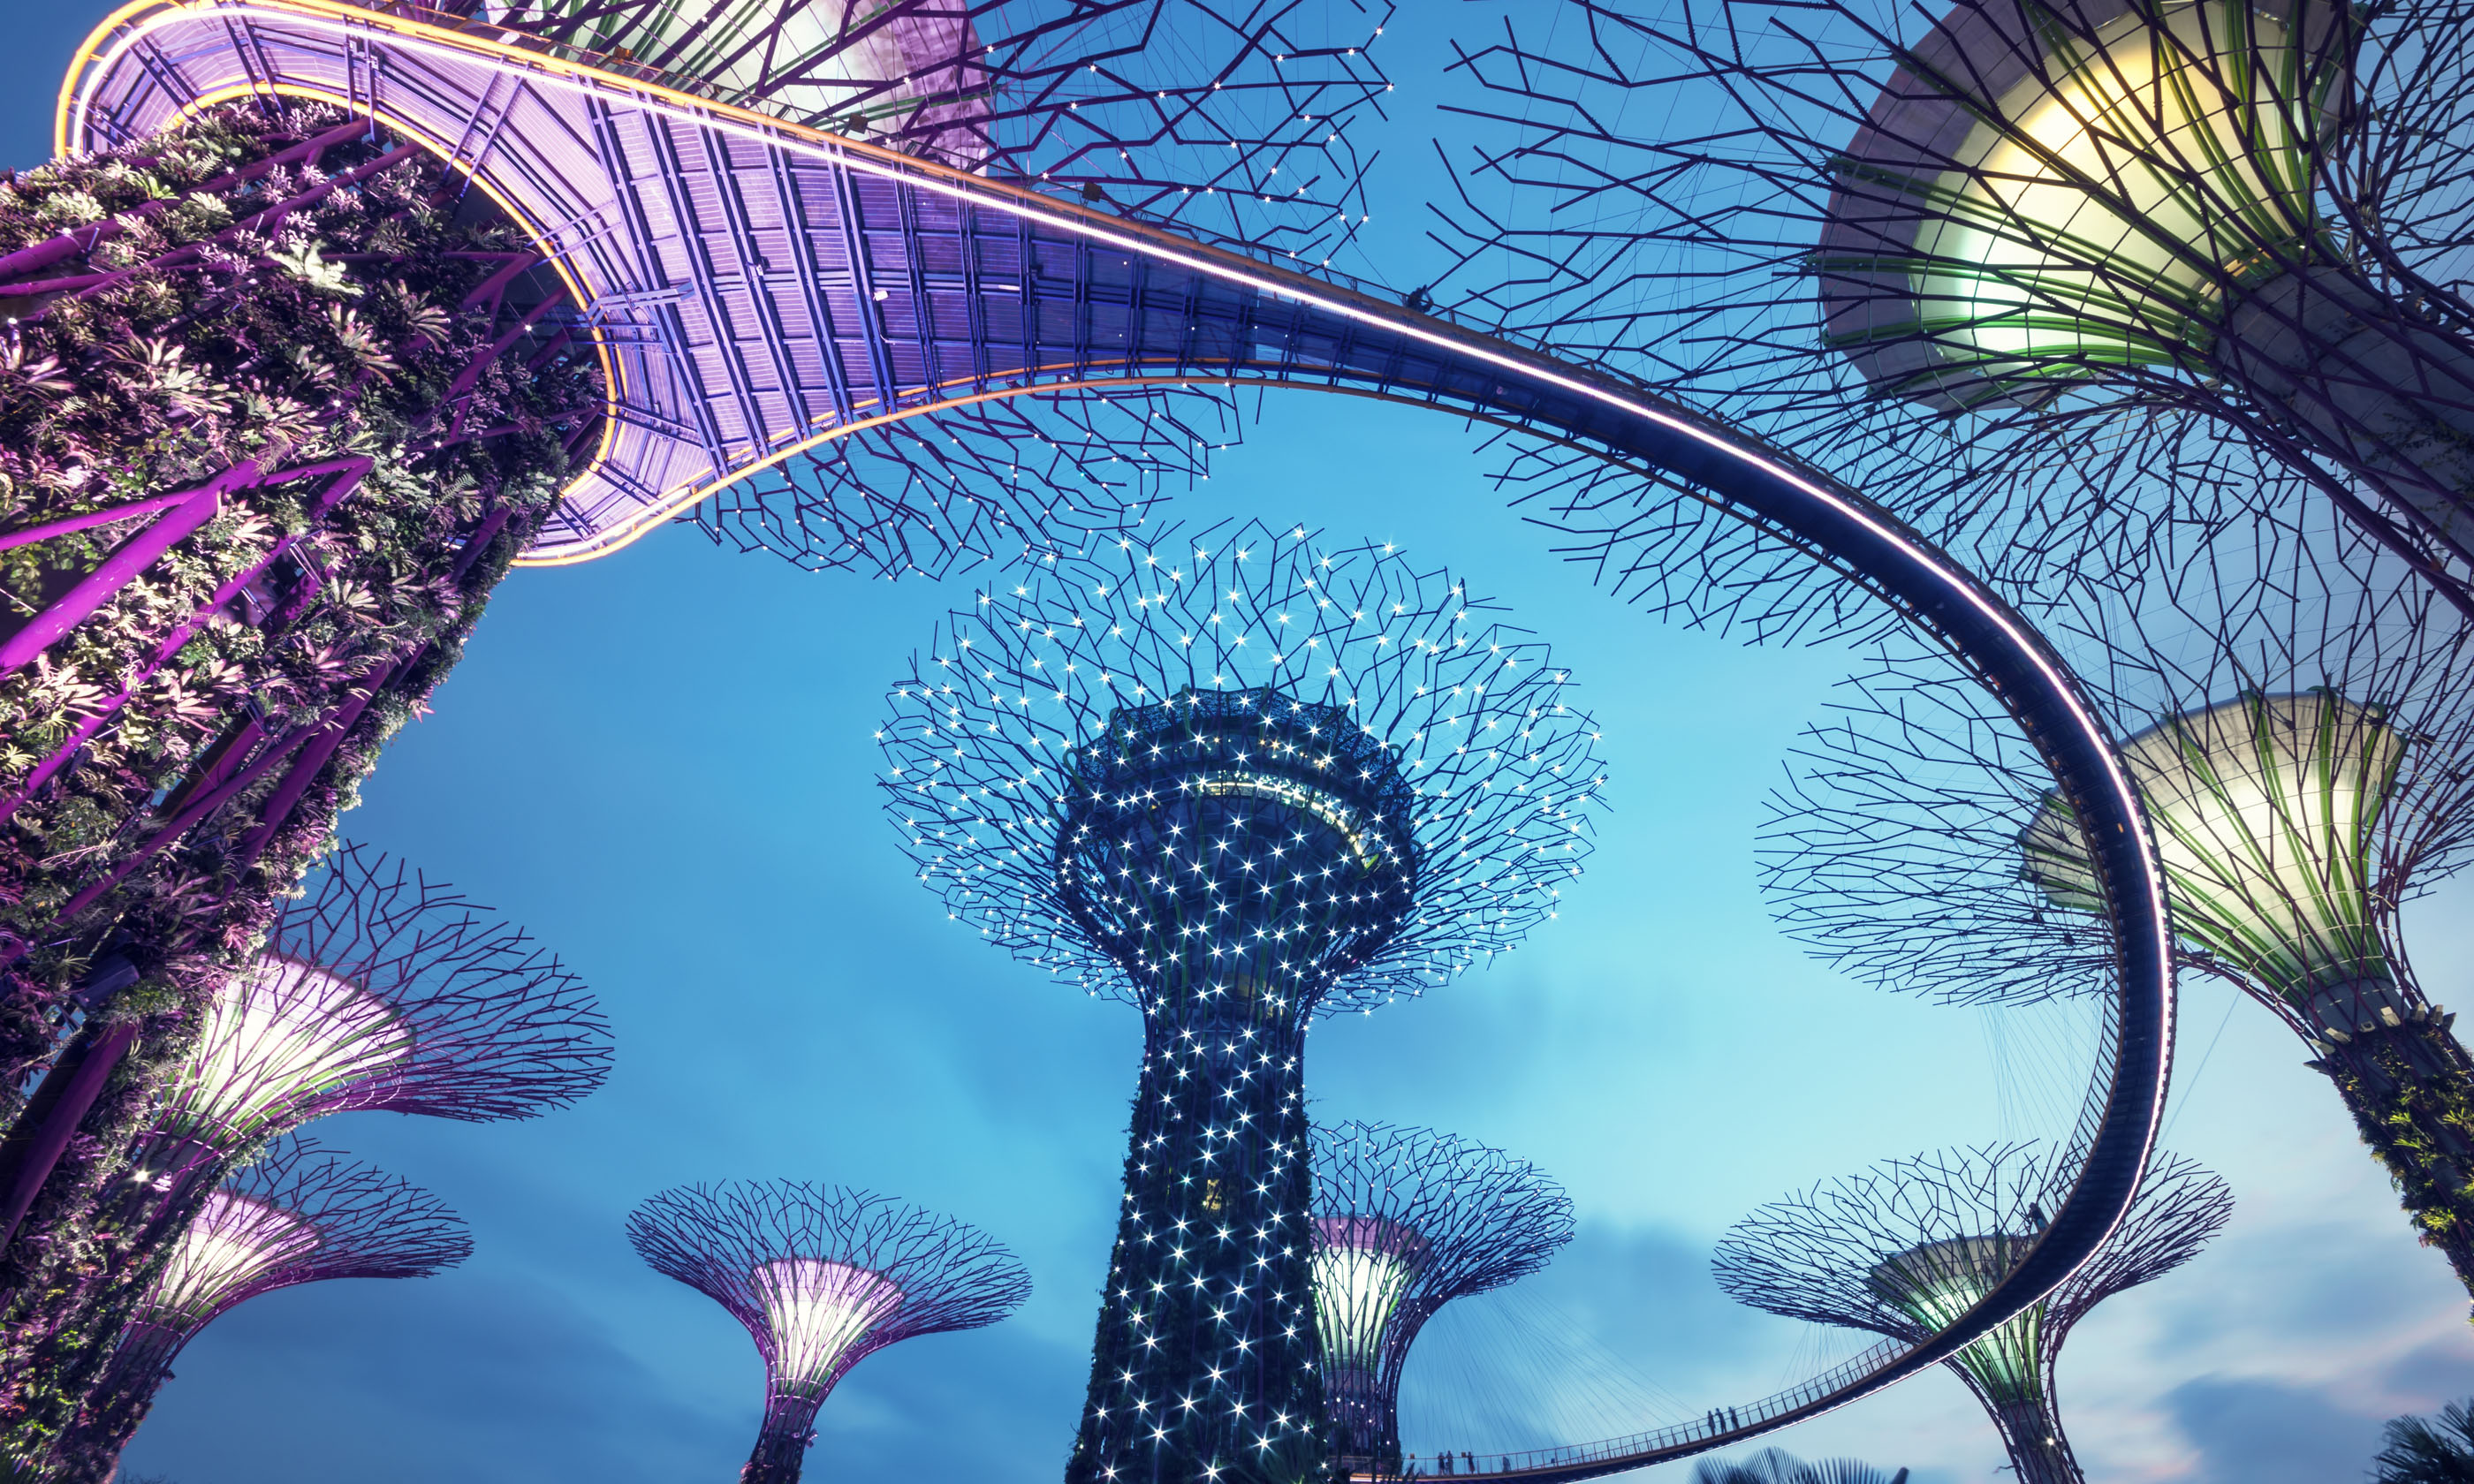 Super Tree garden, Singapore (Shutterstock: see main credit below)